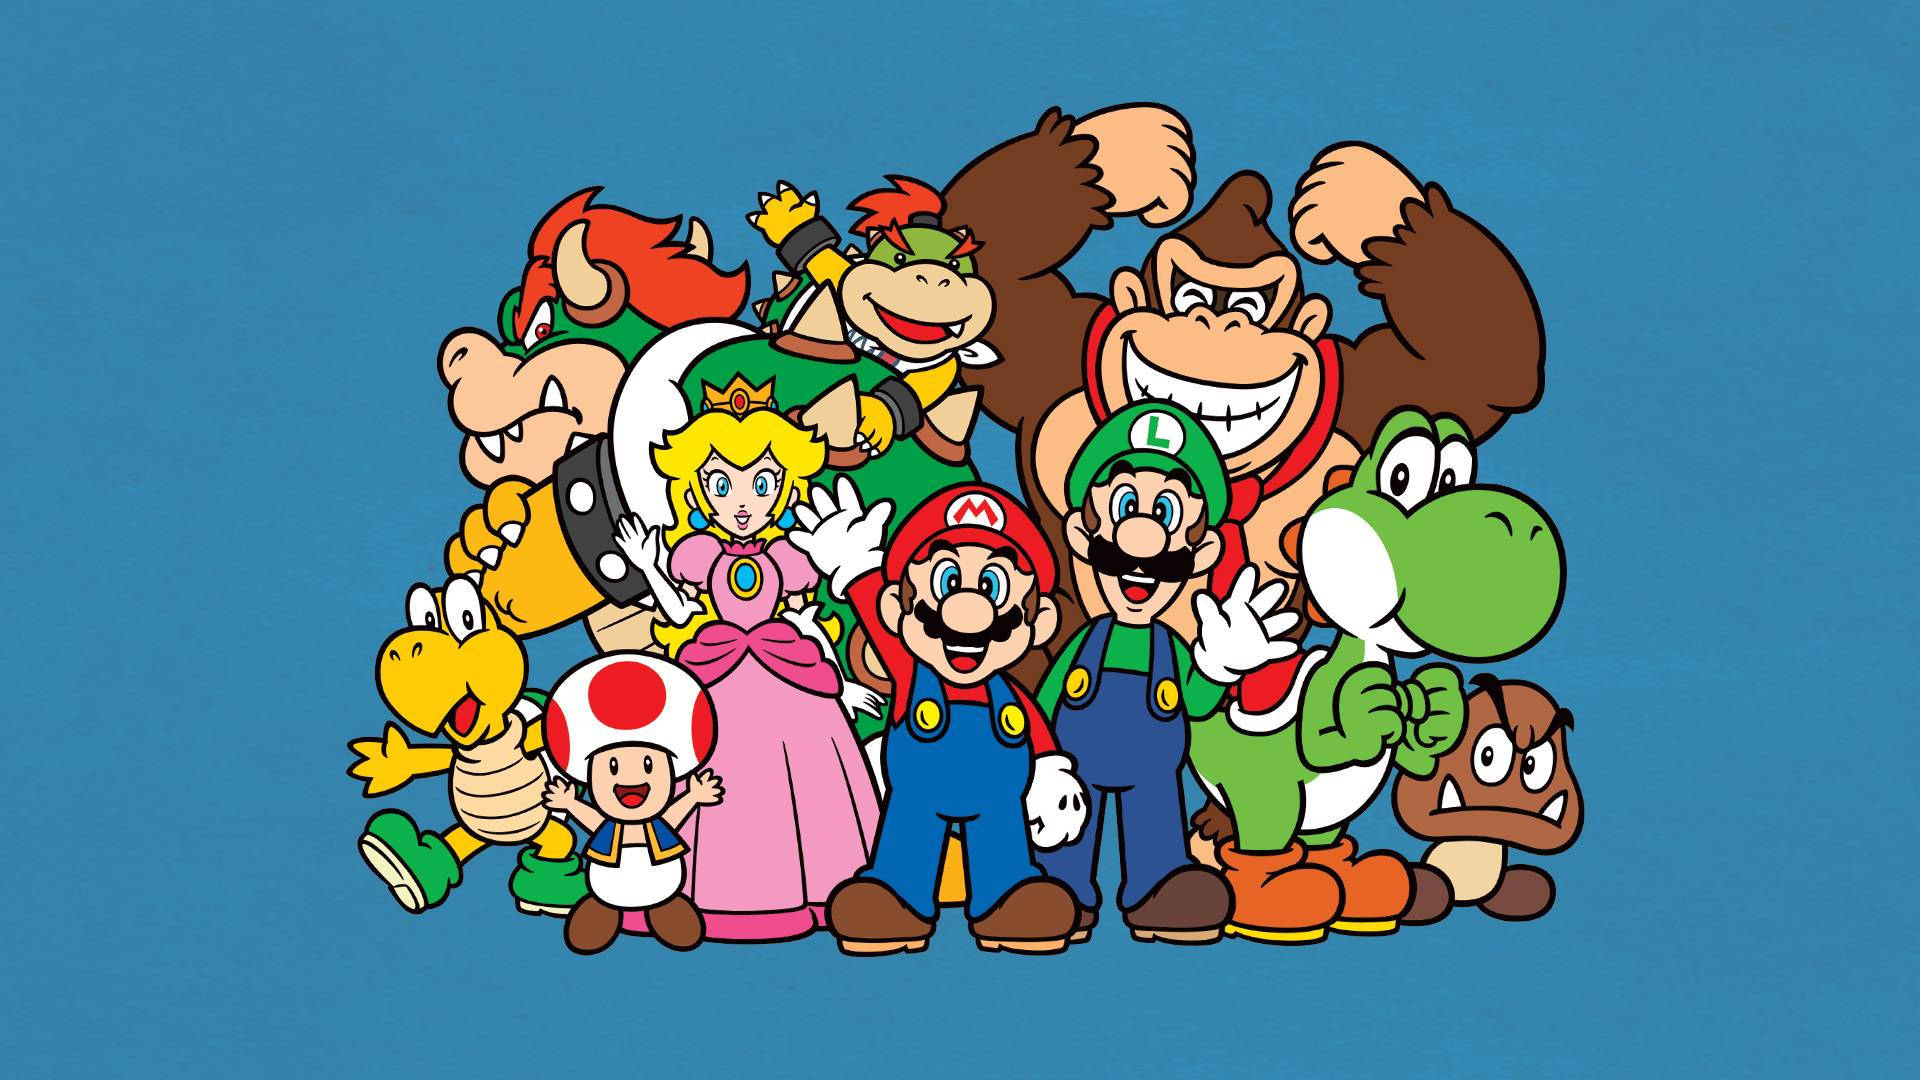 Nintendo Wallpaper Images